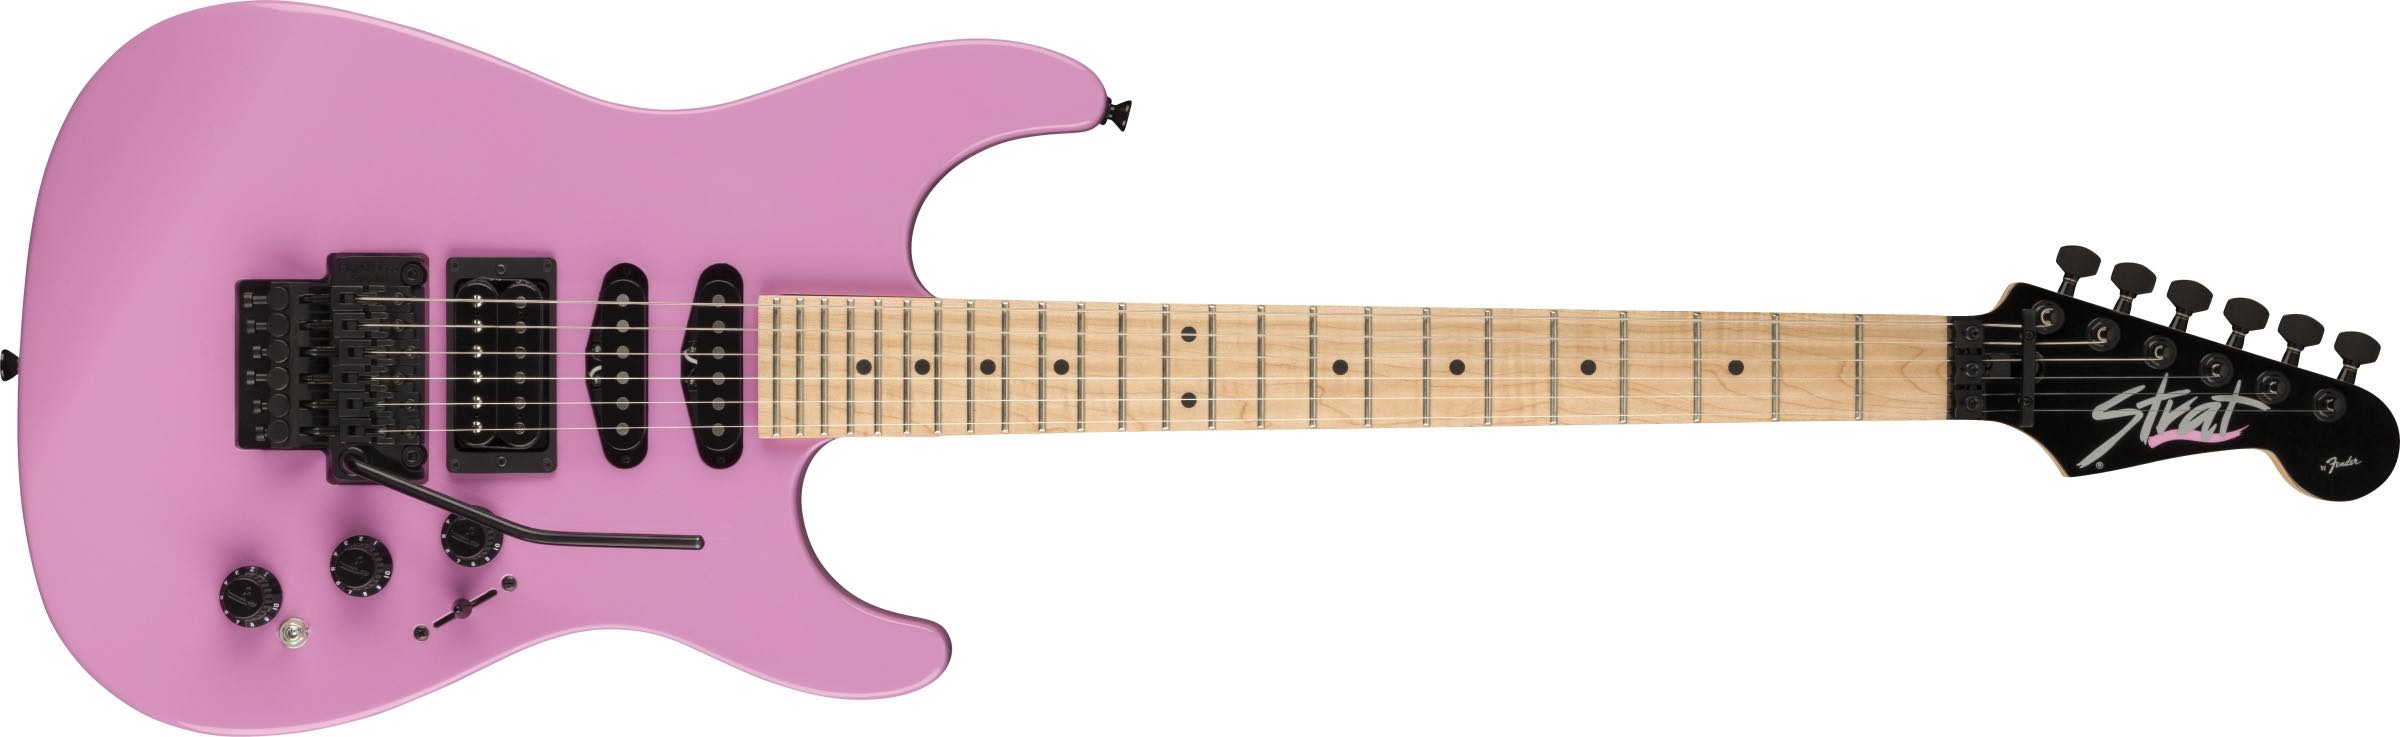 Fender HM Strat Ltd Ed Flash Pink chitarra guitar strumenti musicali